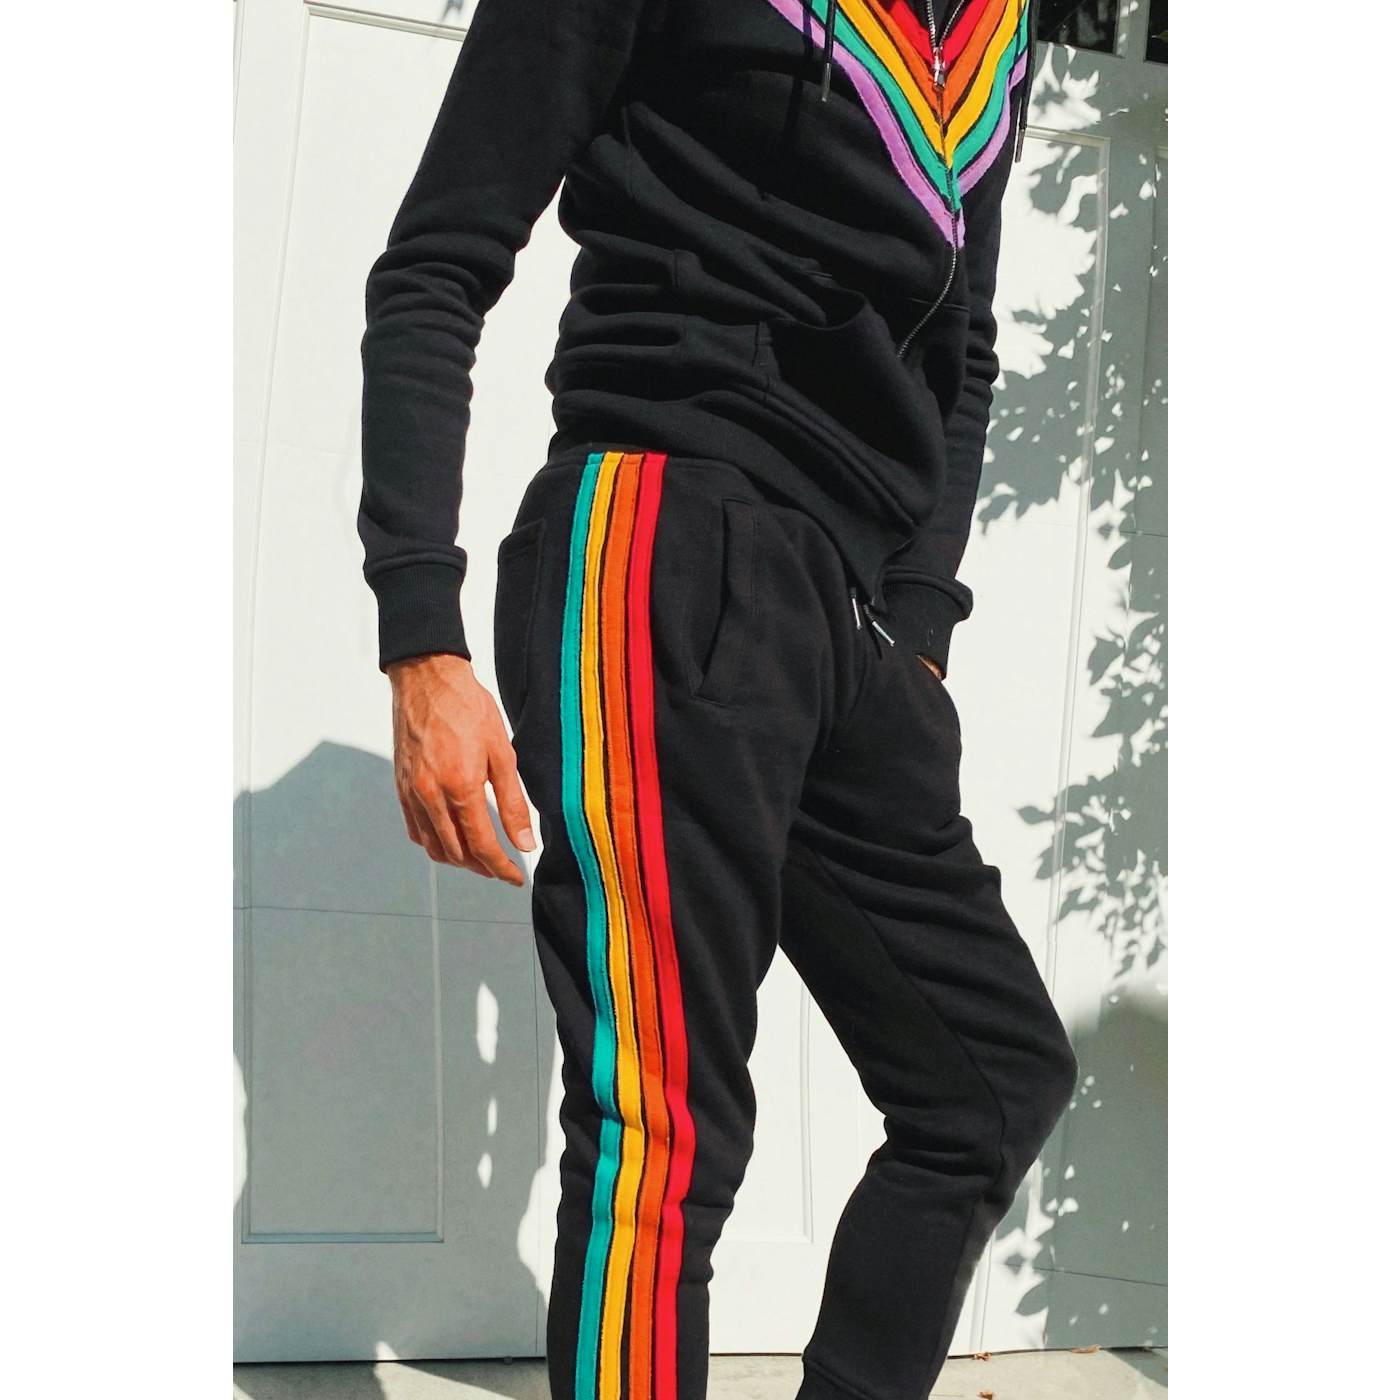 Joey Graceffa The Rainbow Black Joggers